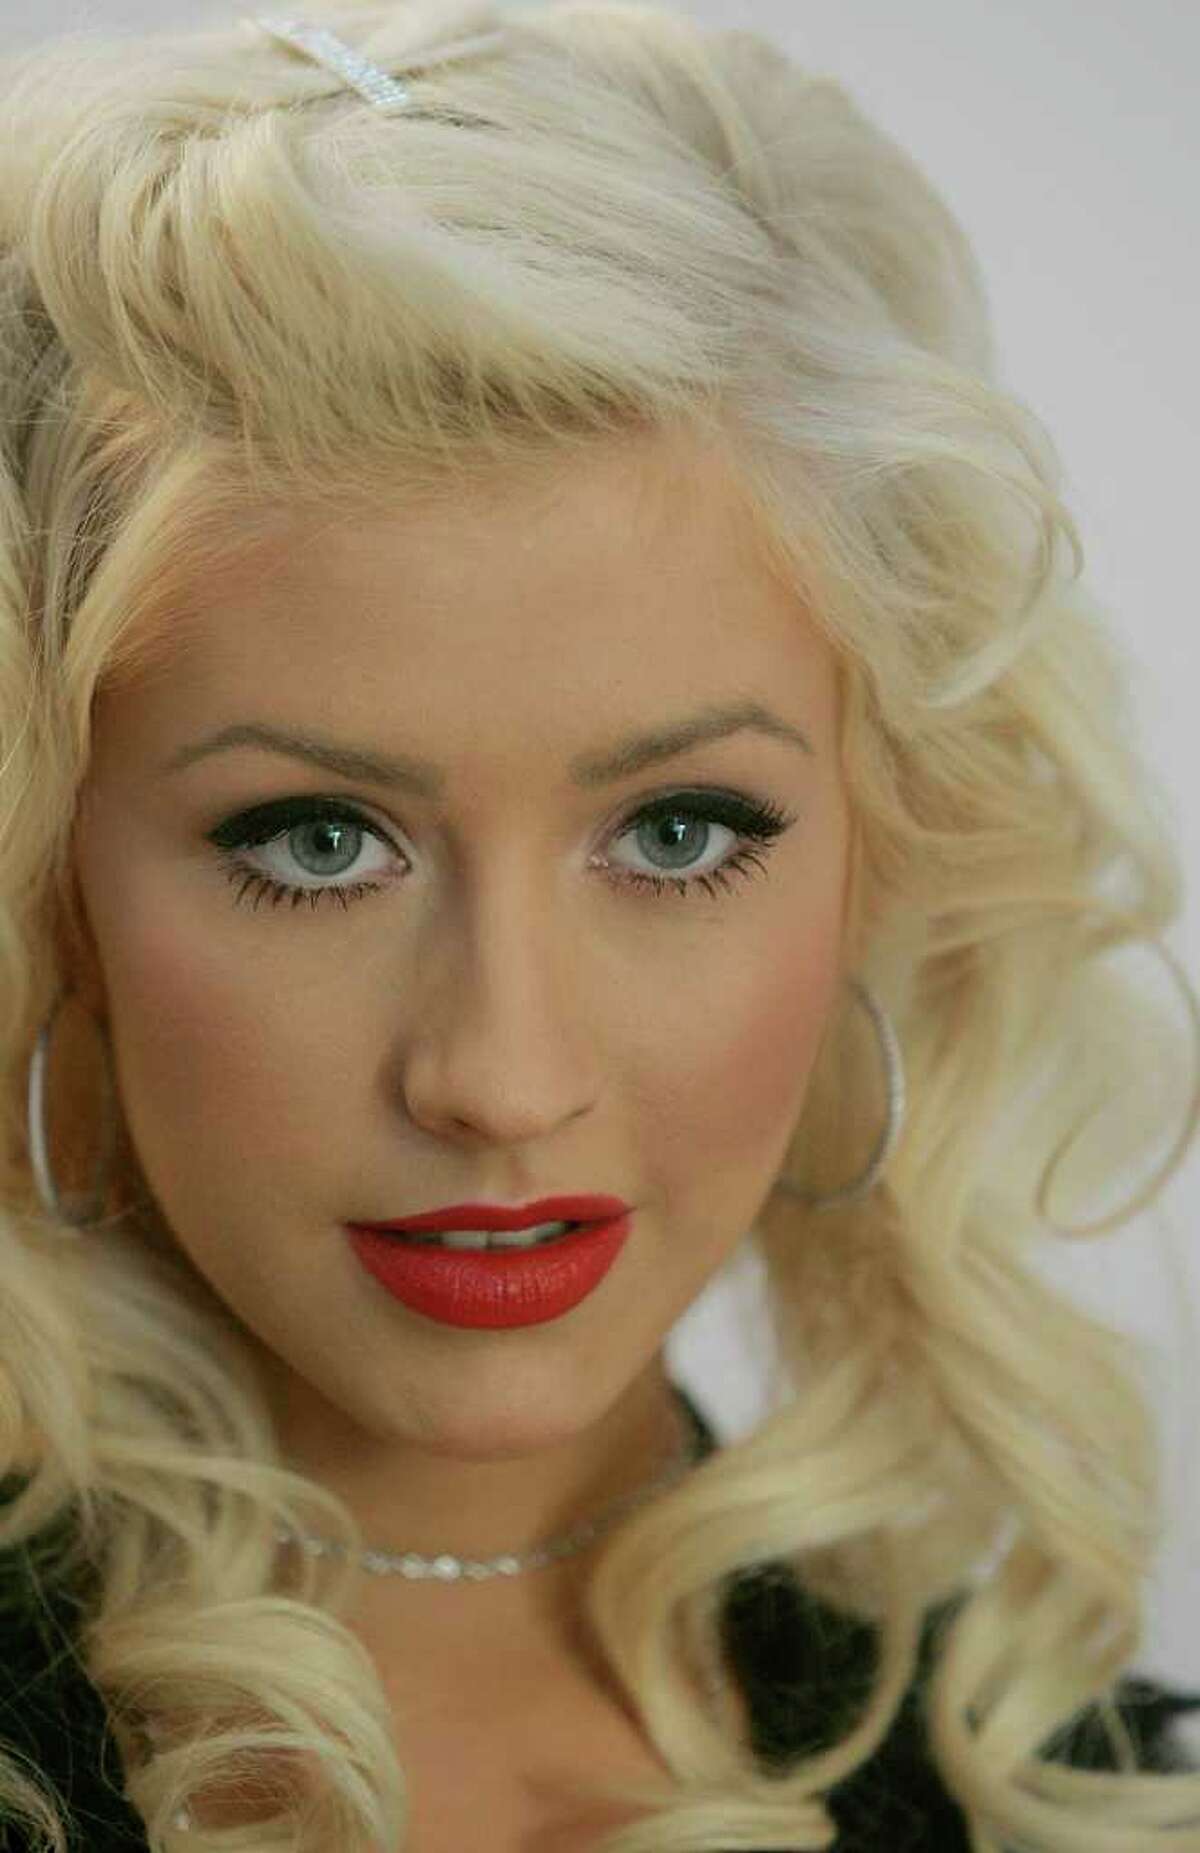 Christina Aguilera arrested for drunkenness